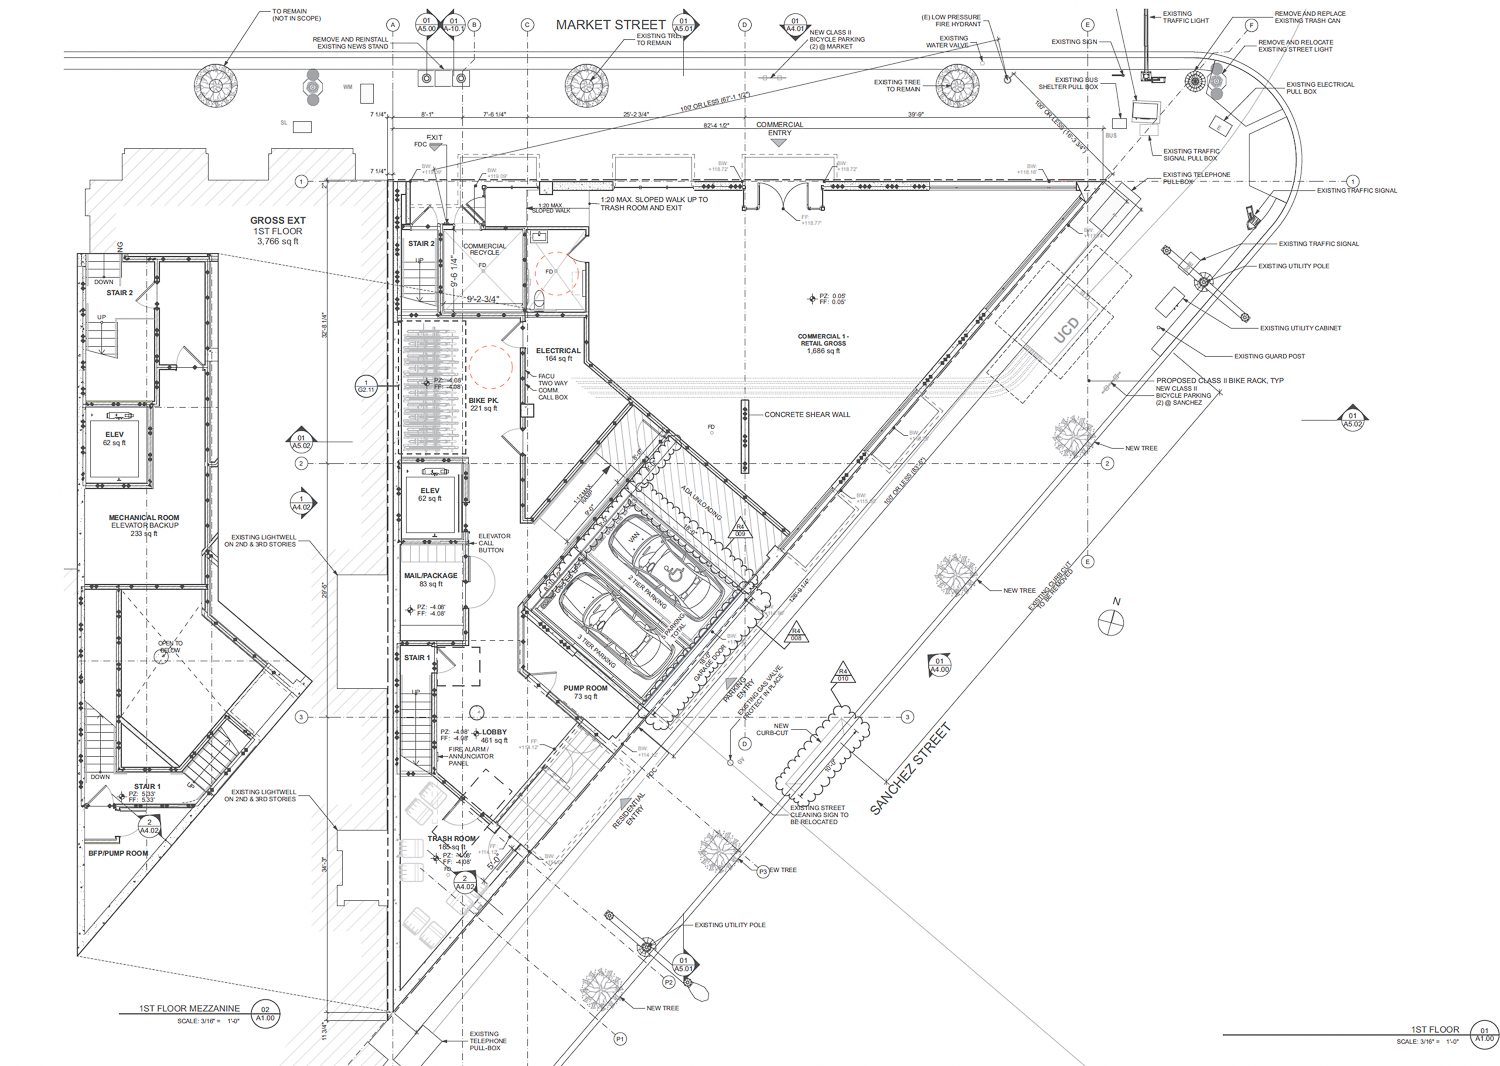 2201 Market Street ground-level floor plan, illustration by RG Architecture